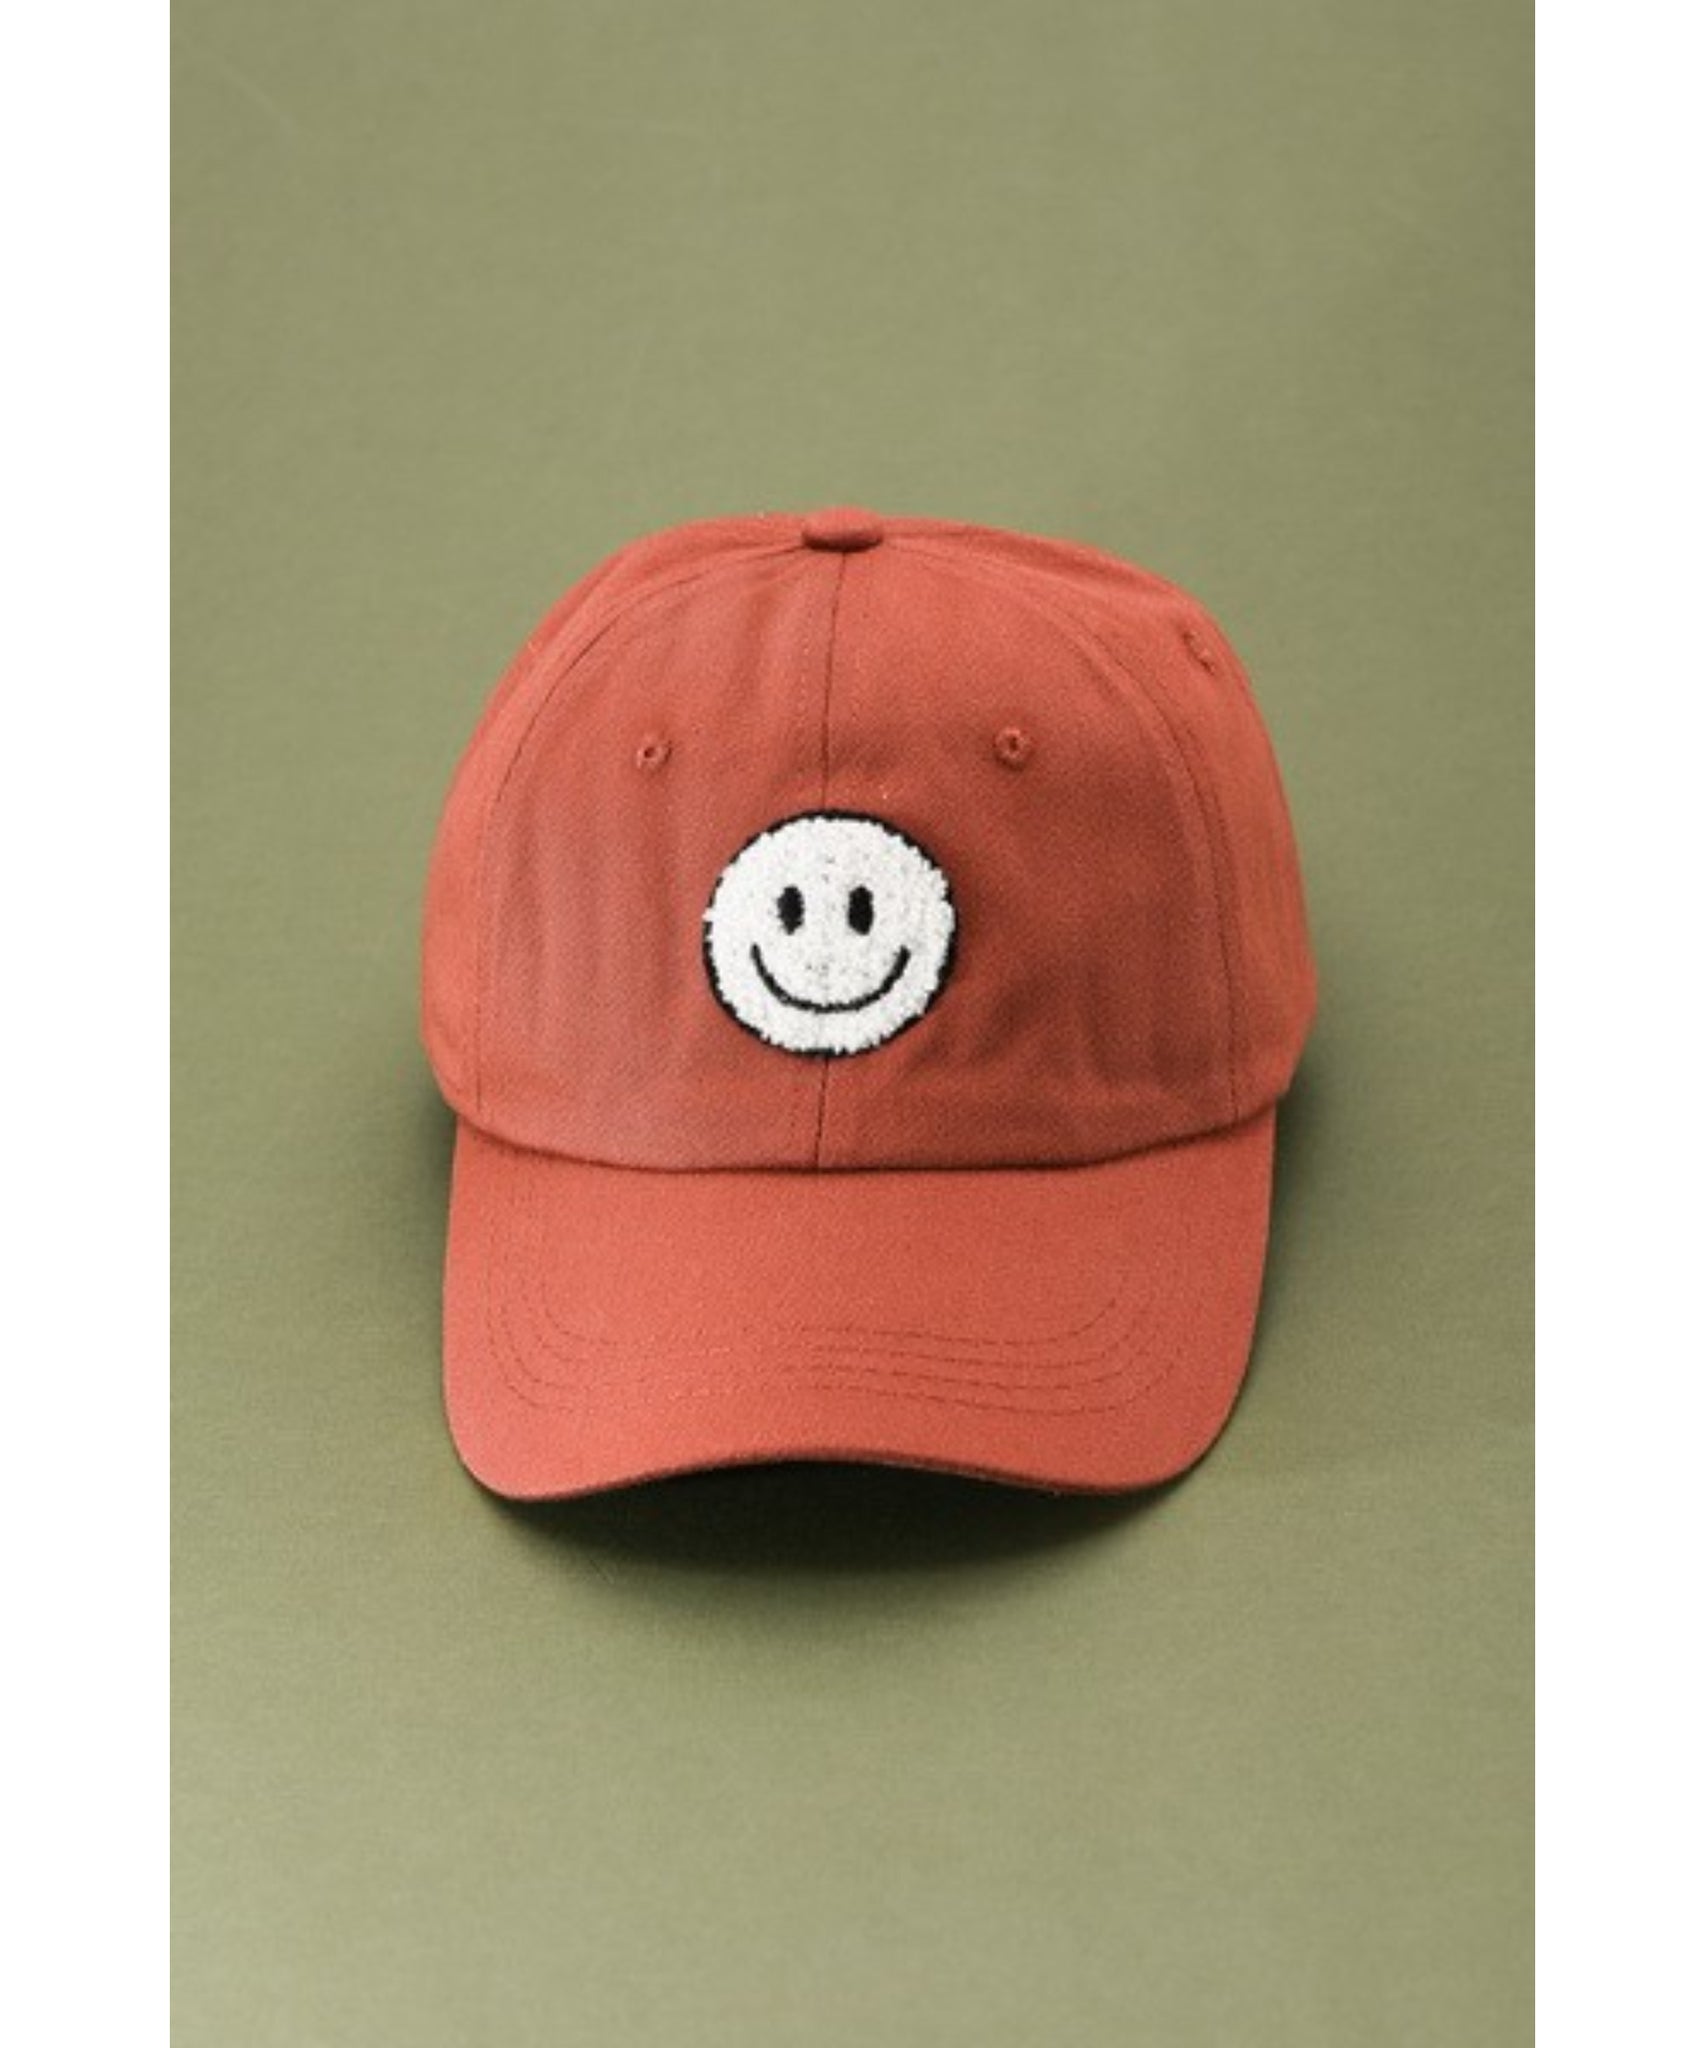 All Smiles Sherpa Baseball Cap - Clay